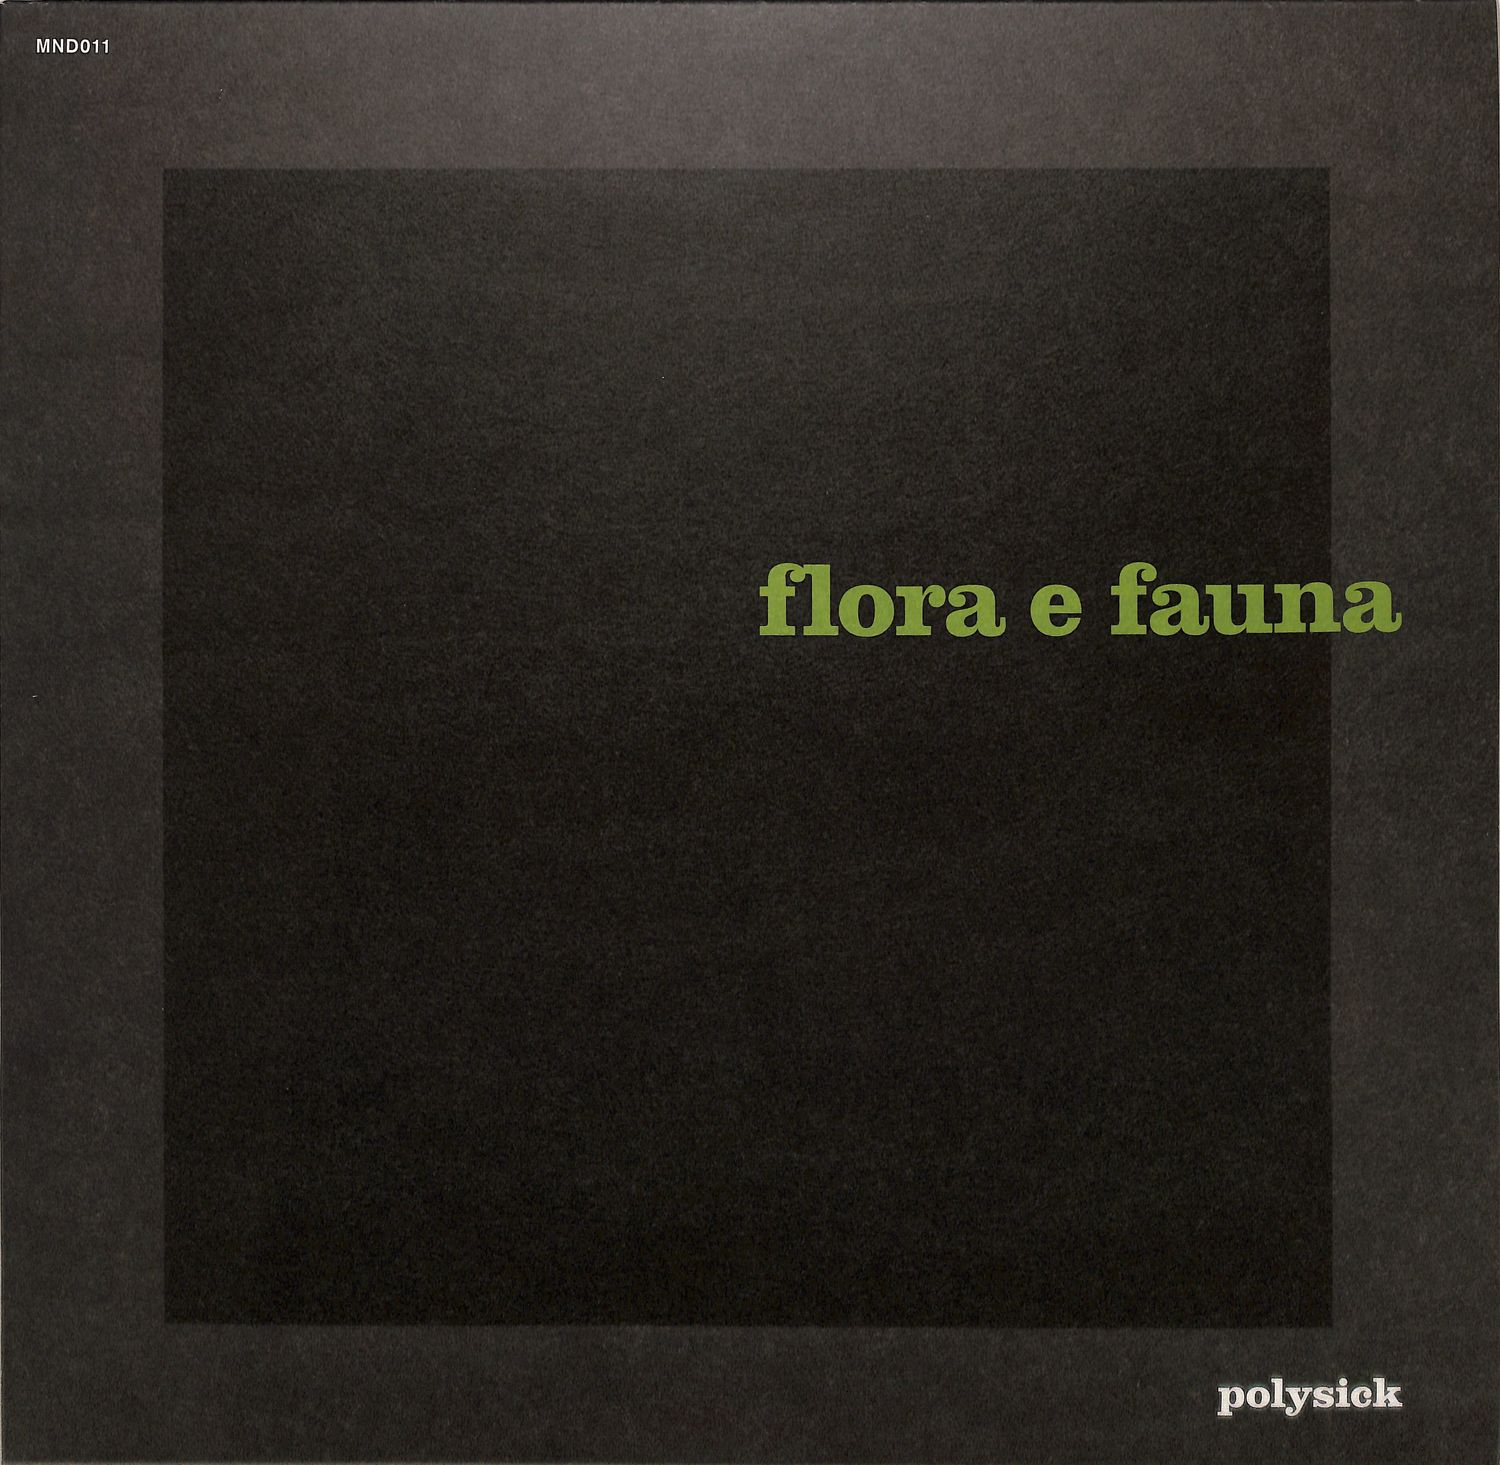 Polysick - FLORA E FAUNA 